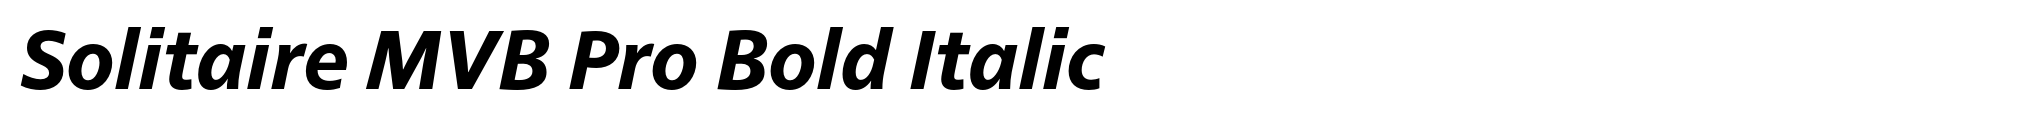 Solitaire MVB Pro Bold Italic image